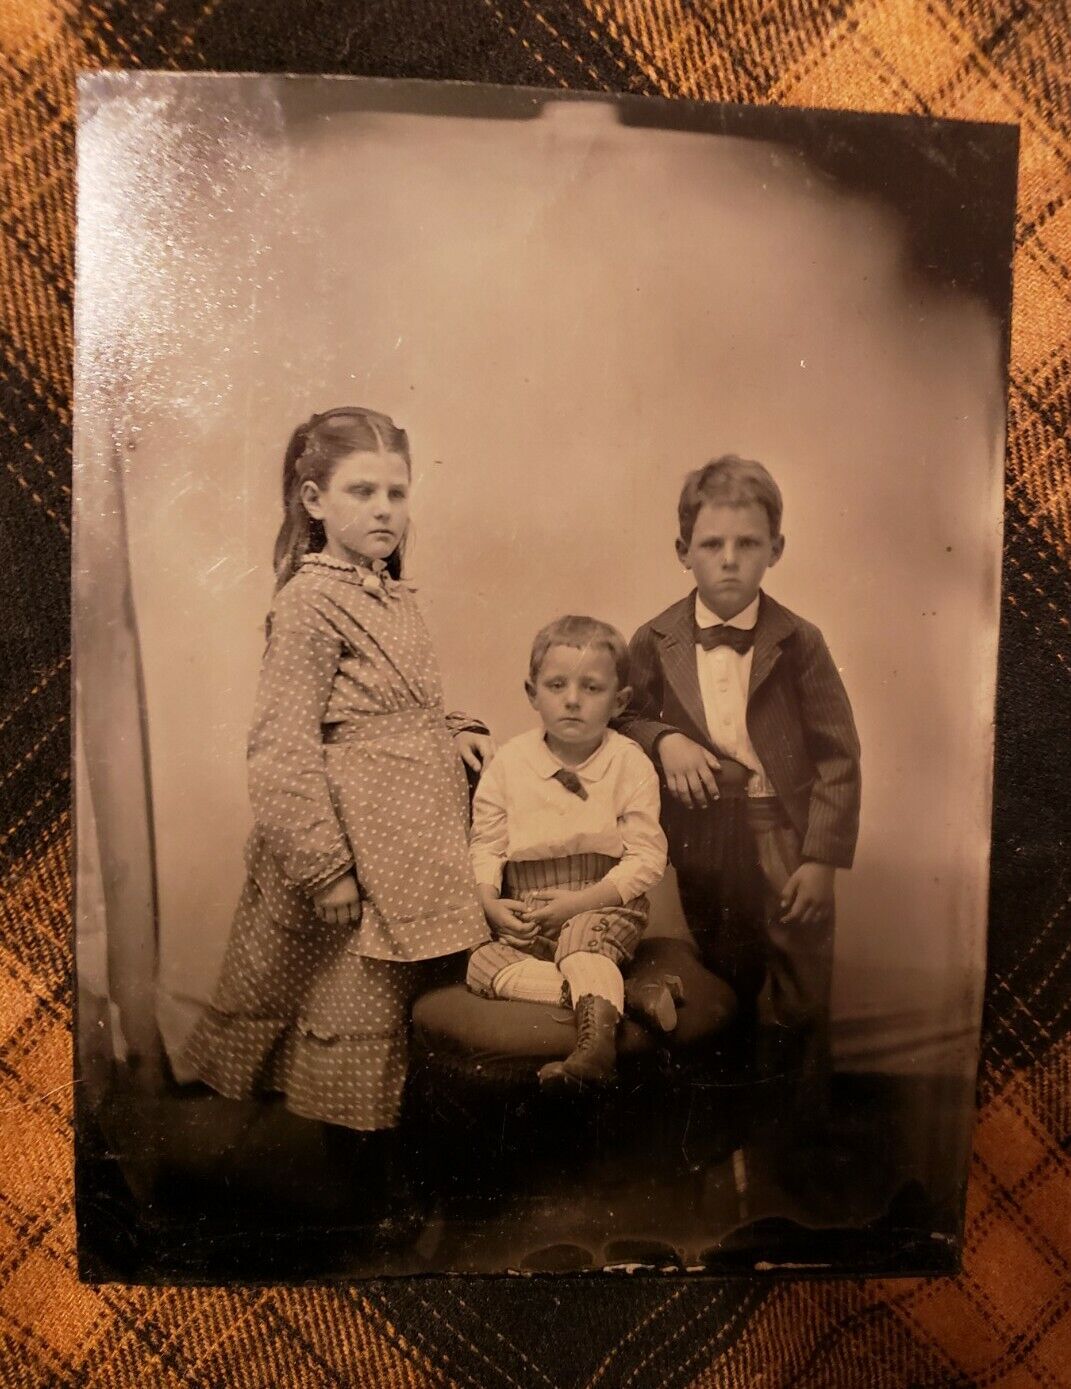 Tintype of Pioneer Children/Siblings. Wild West. Great Collectible  